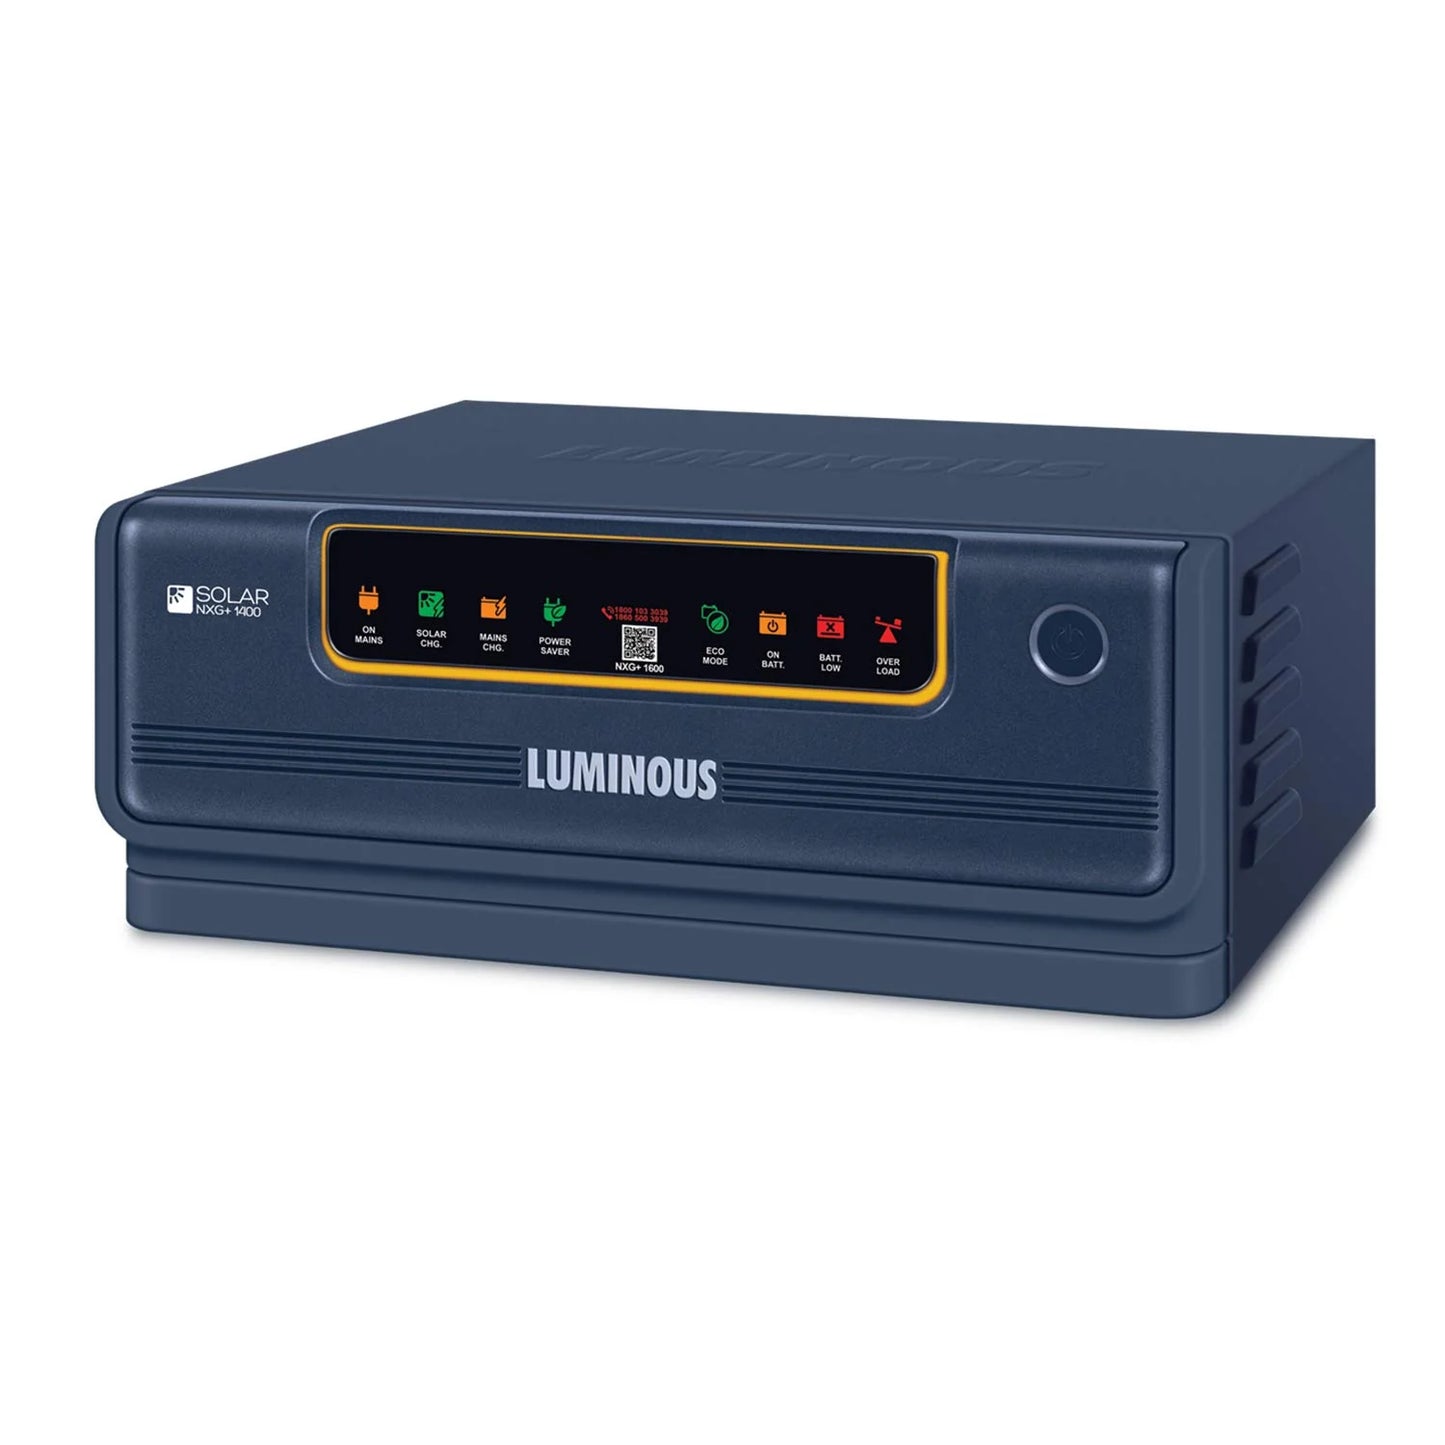 Luminous NXG+ 1400 Inverter (1) with LPTT12150H Battery (1) and Solar Panel 165W (2)